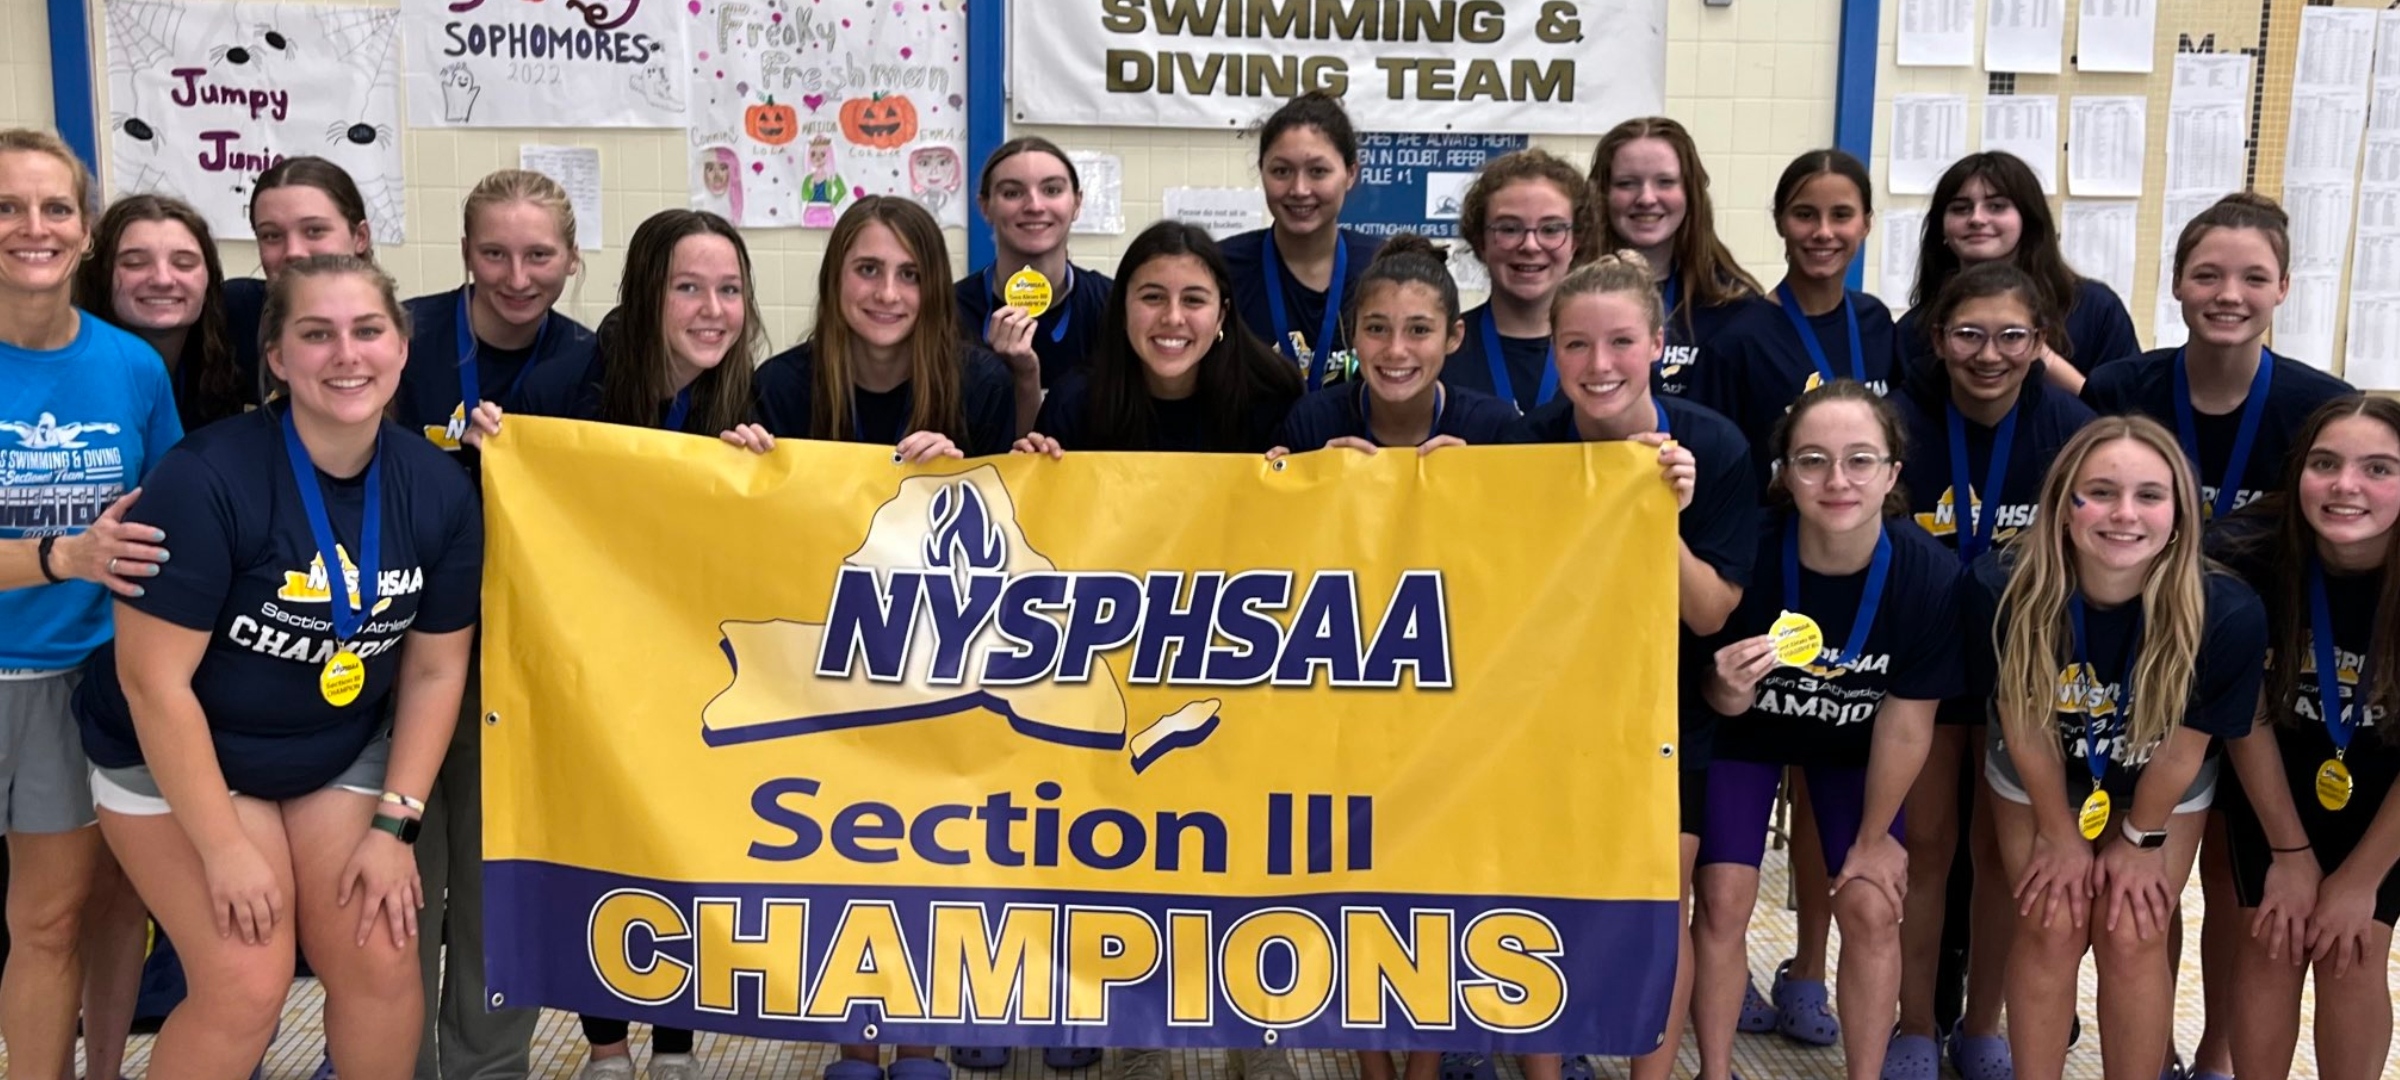 Swim Team holding Section III championship banner